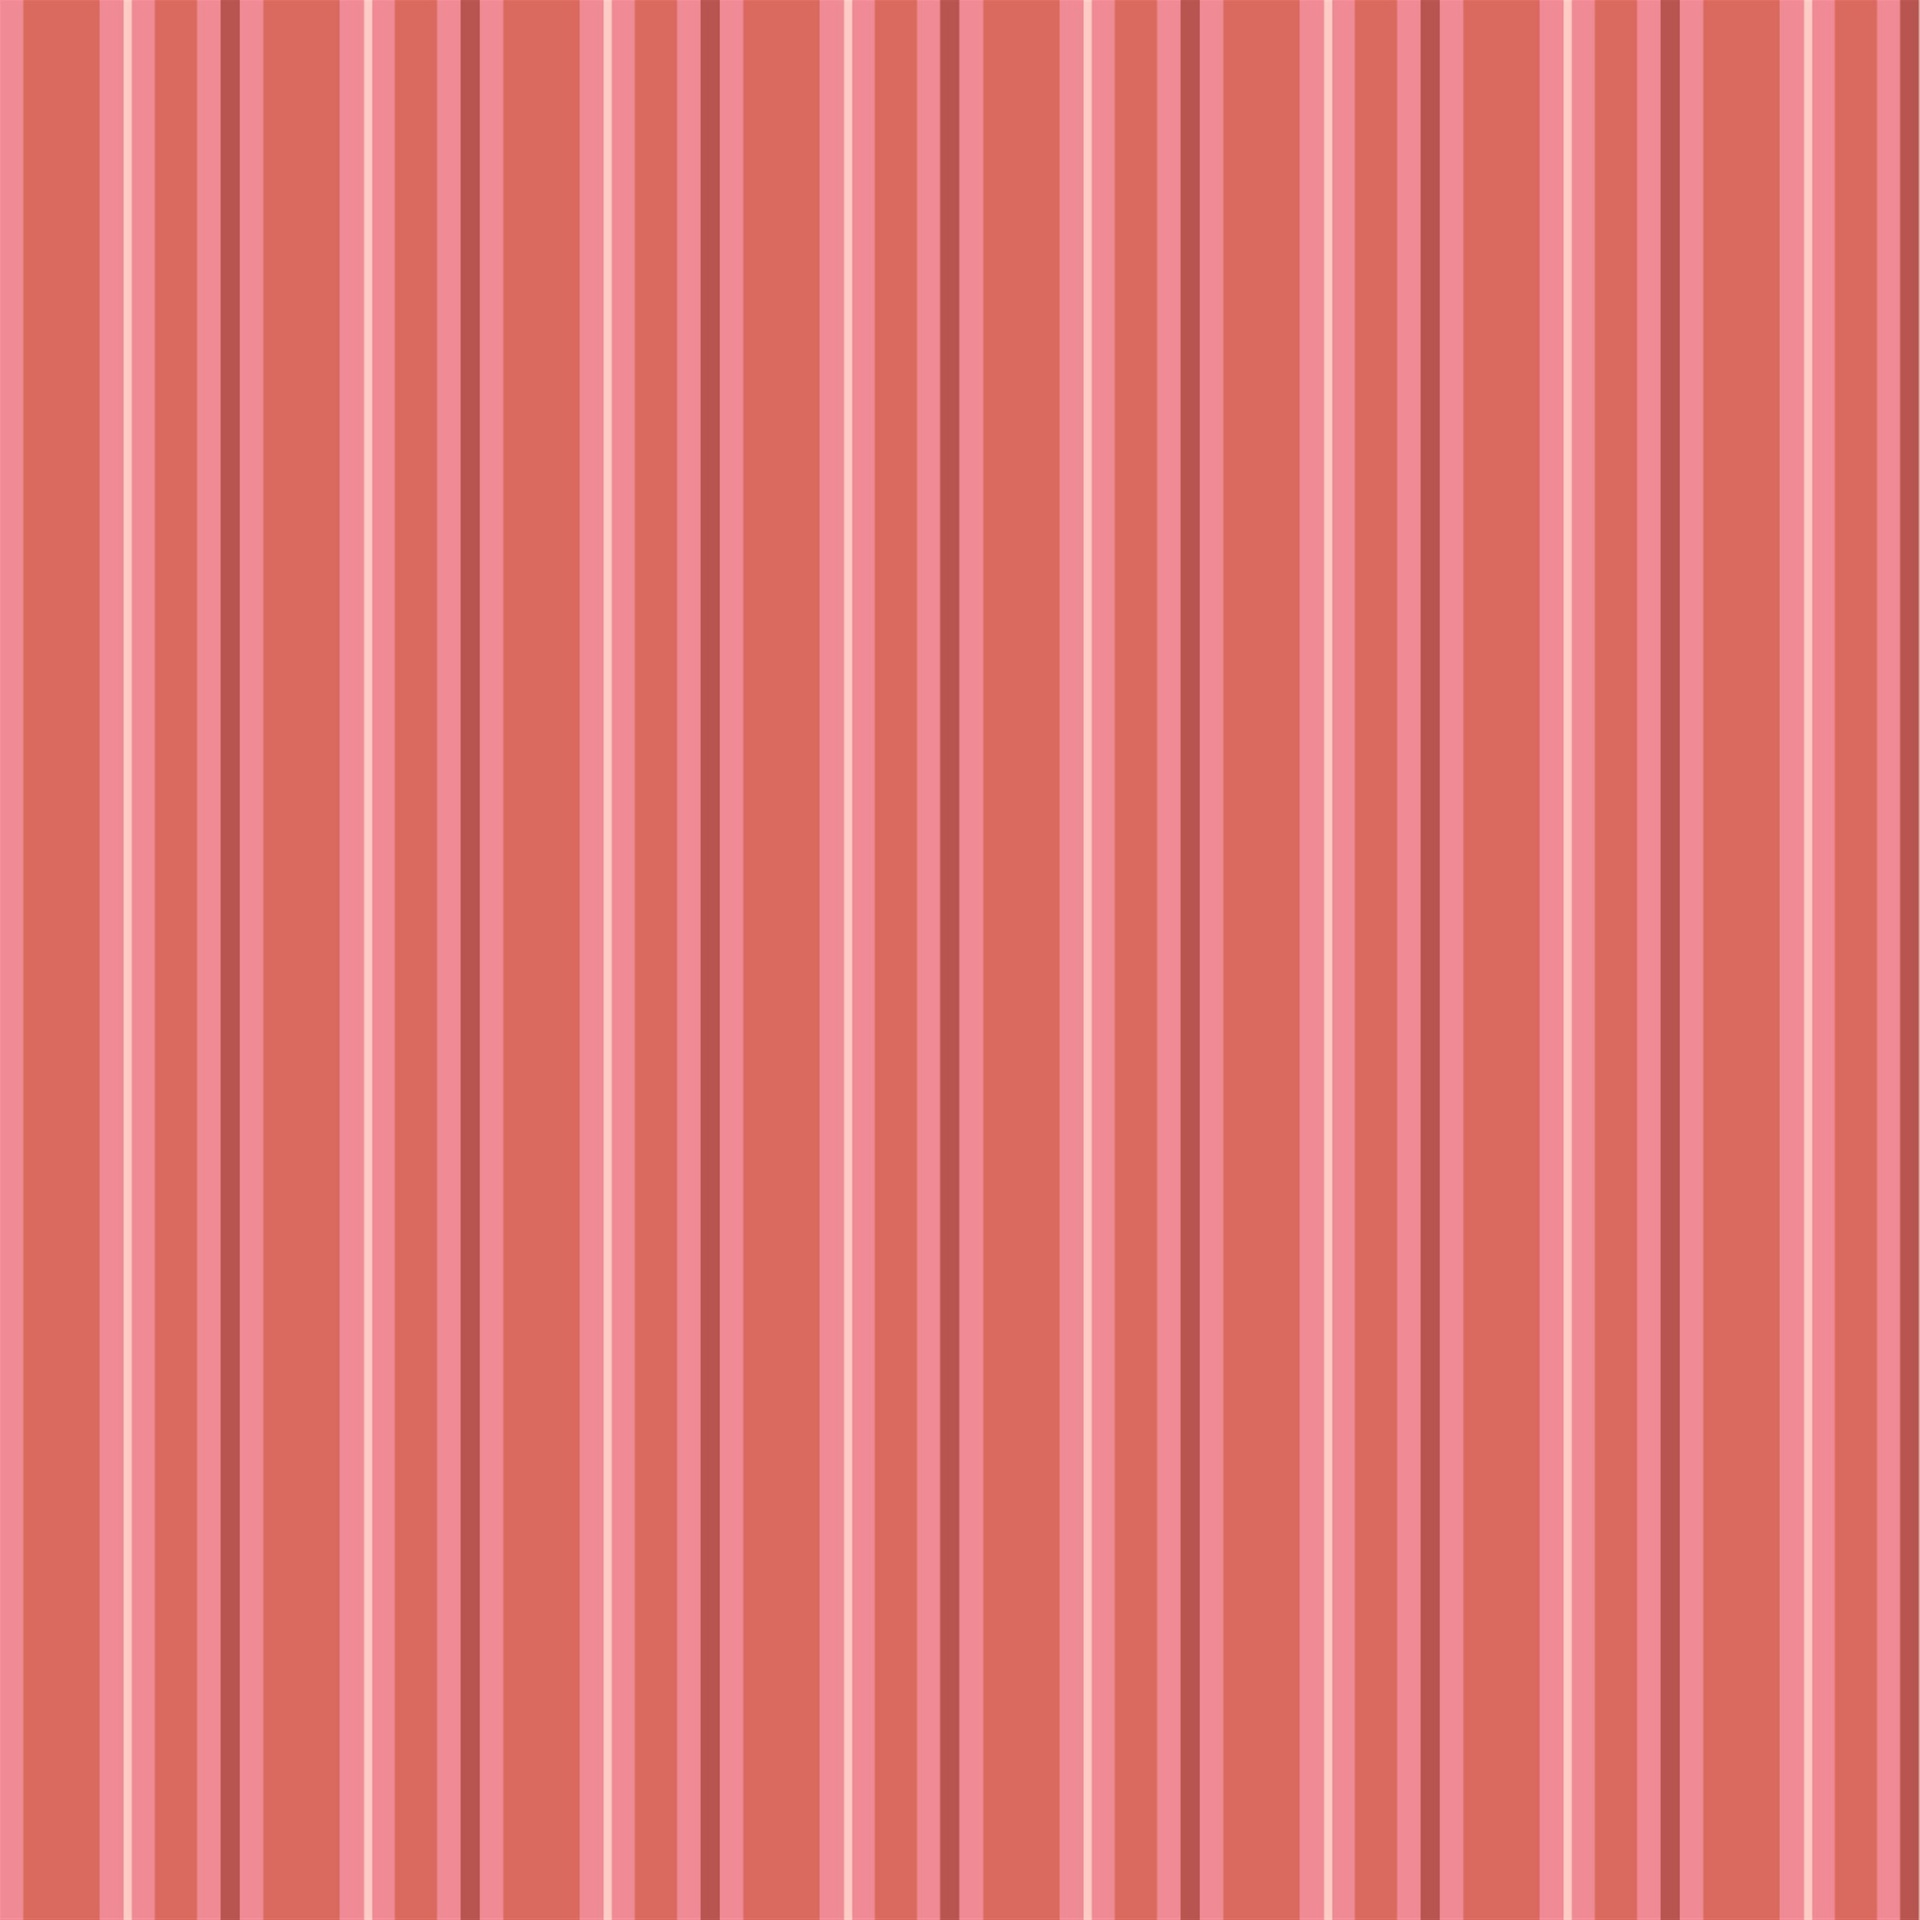 Background Scrapbook Pink Stripes